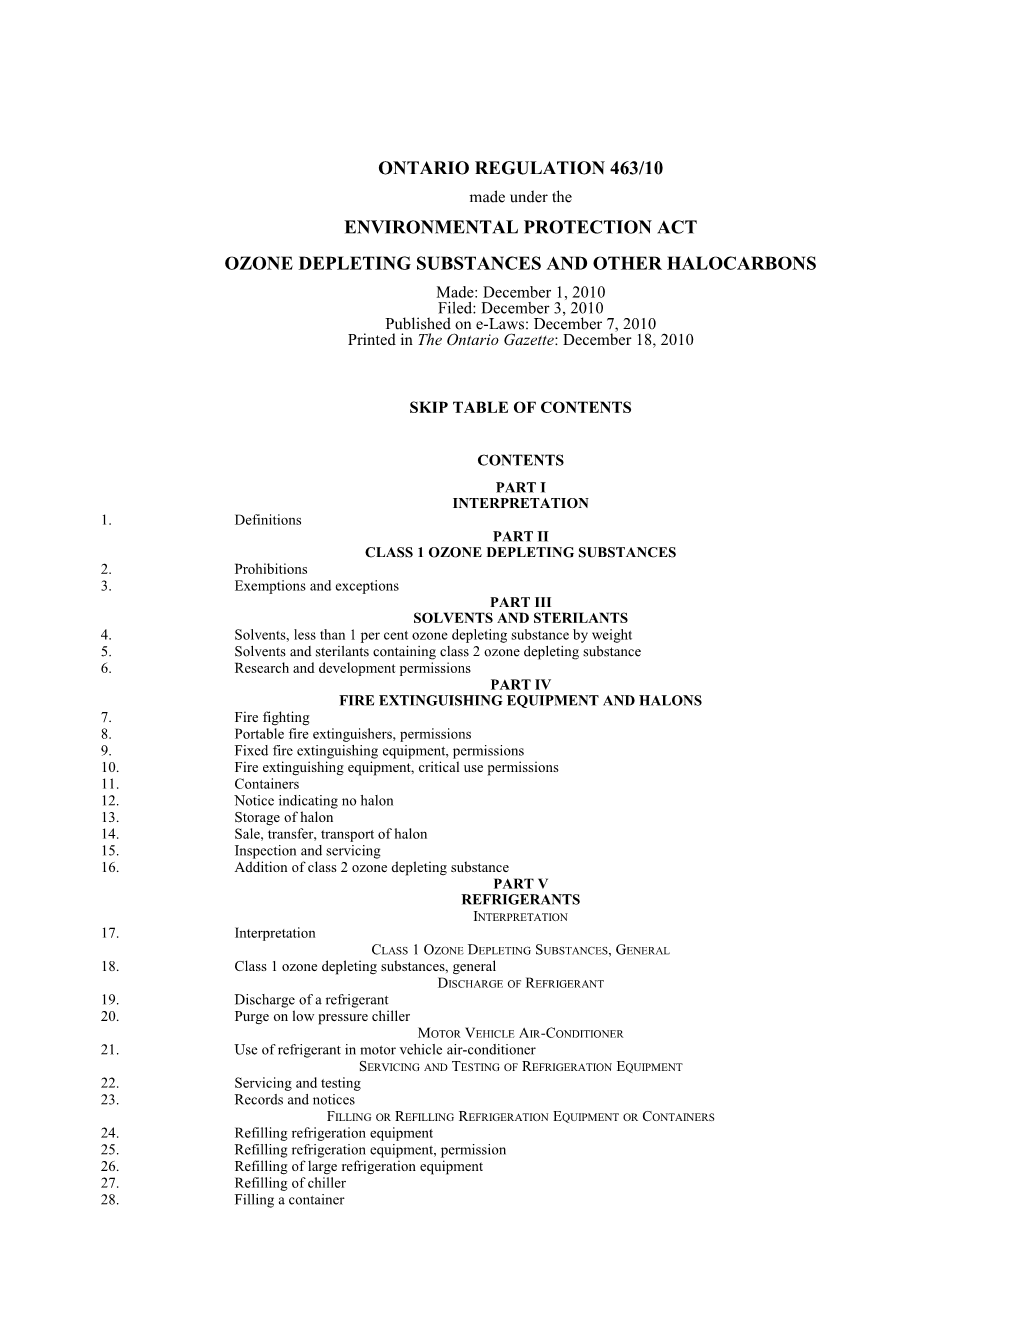 ENVIRONMENTAL PROTECTION ACT - O. Reg. 463/10